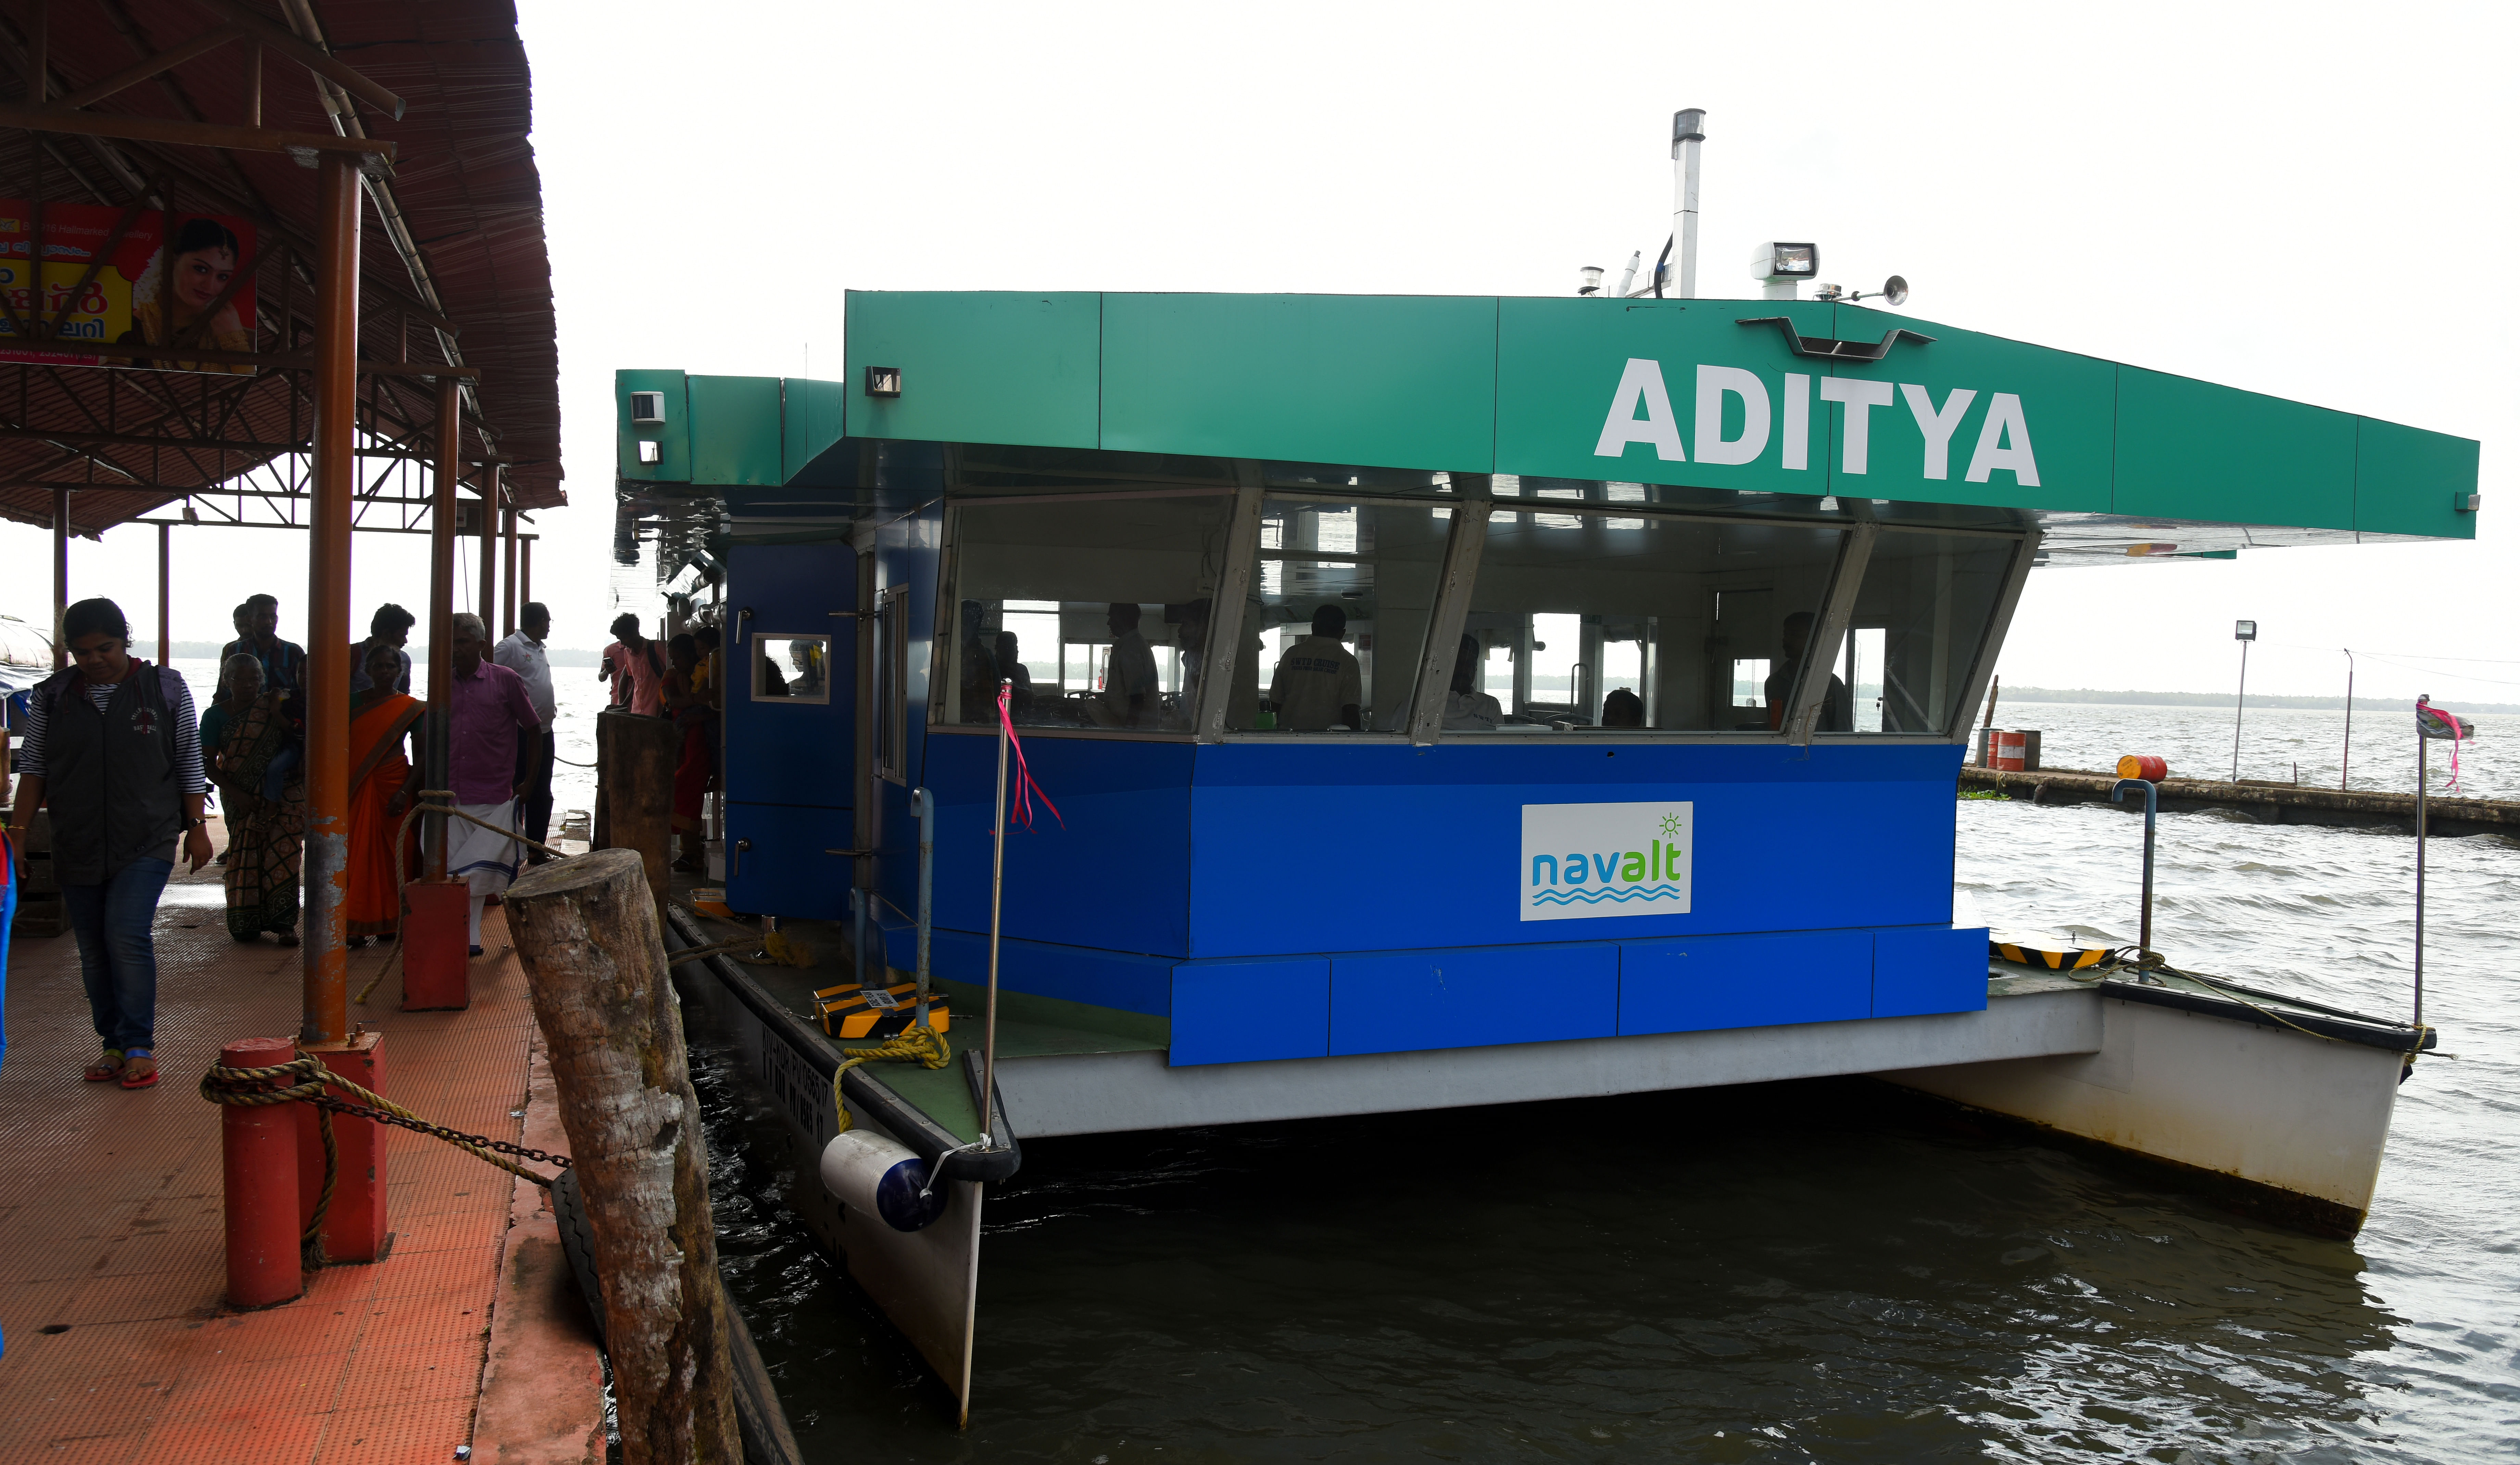 Aditya, India's first solar ferry boat